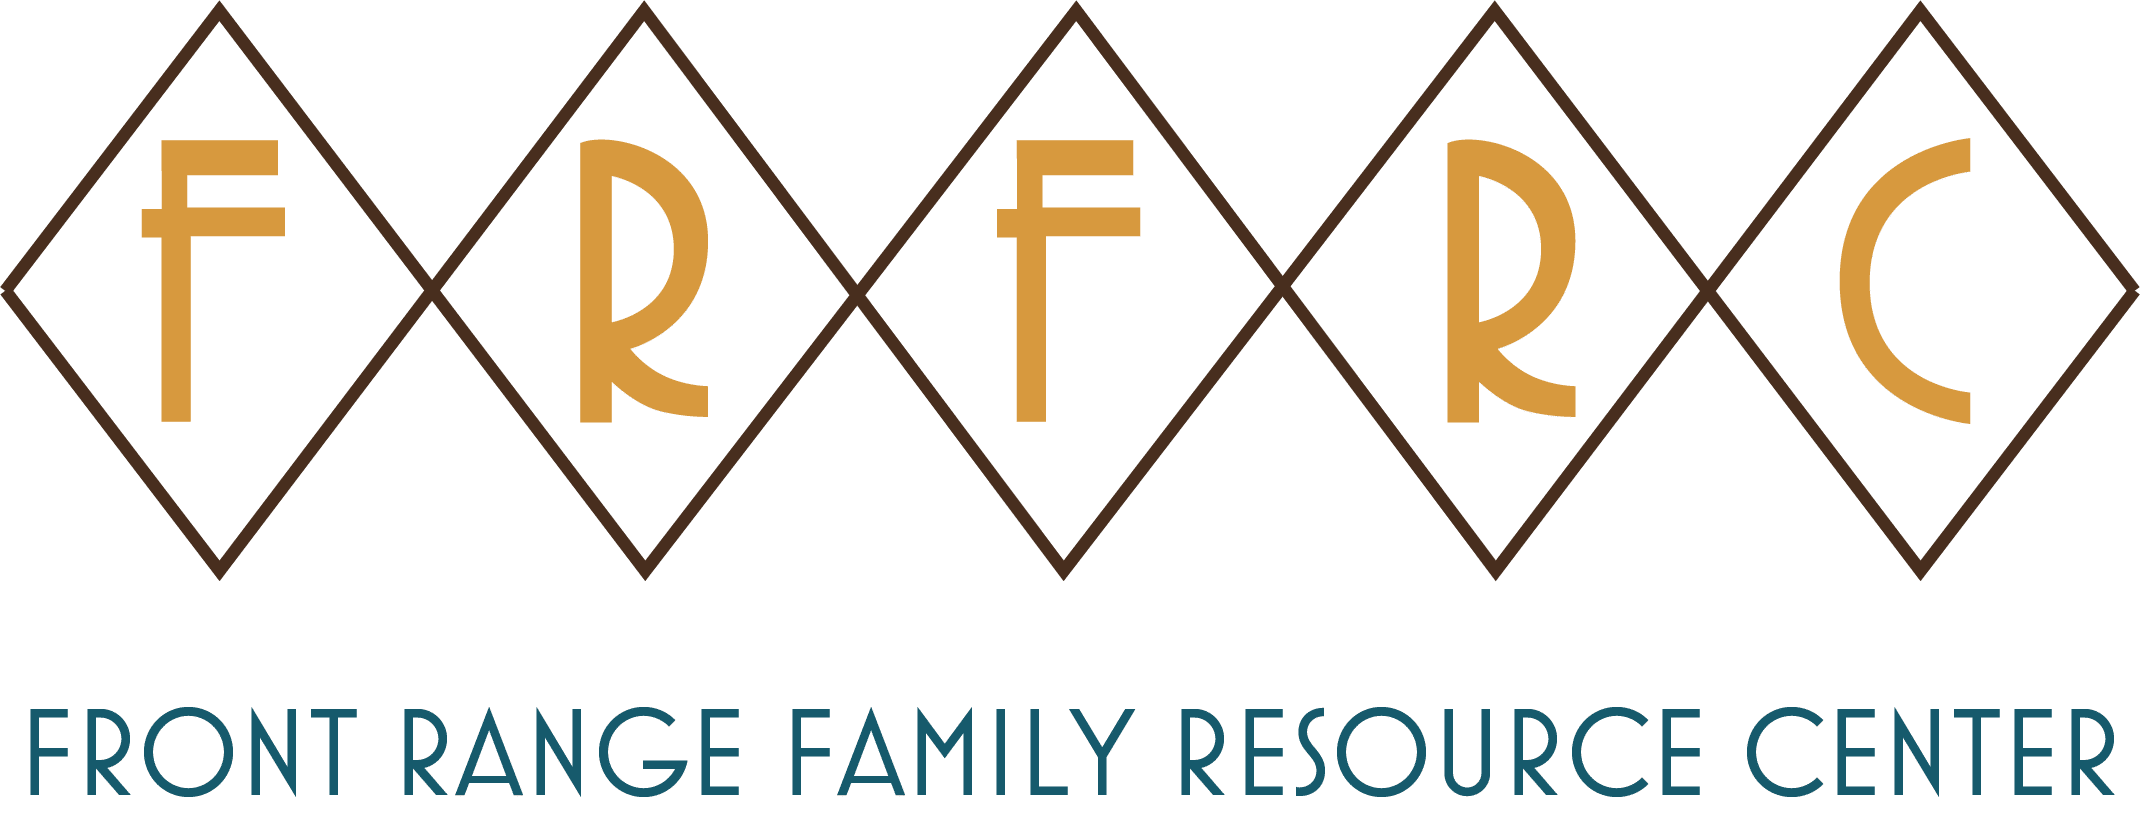 Front Range Family Resource Center